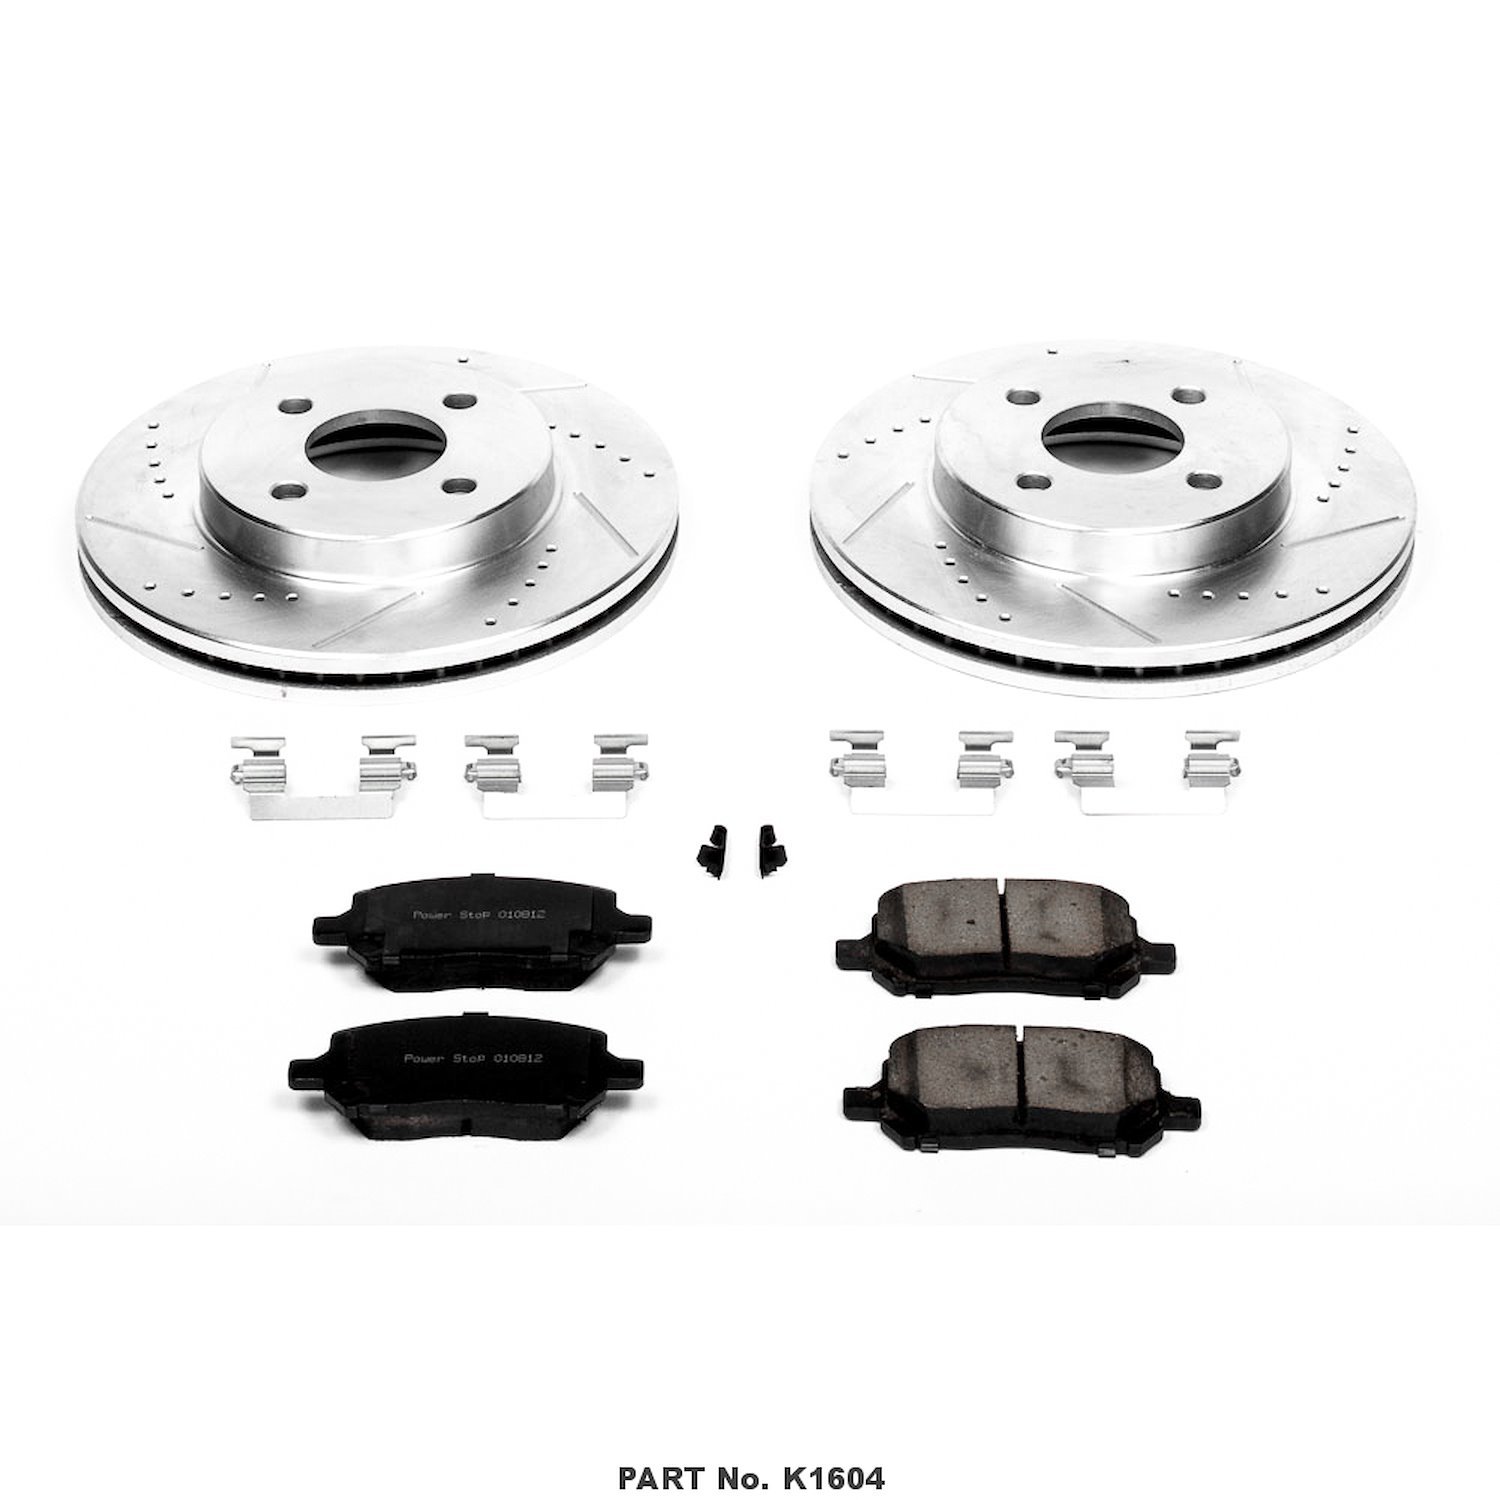 Z23 Evolution Brake Kit for Chevrolet, Saturn and Pontiac